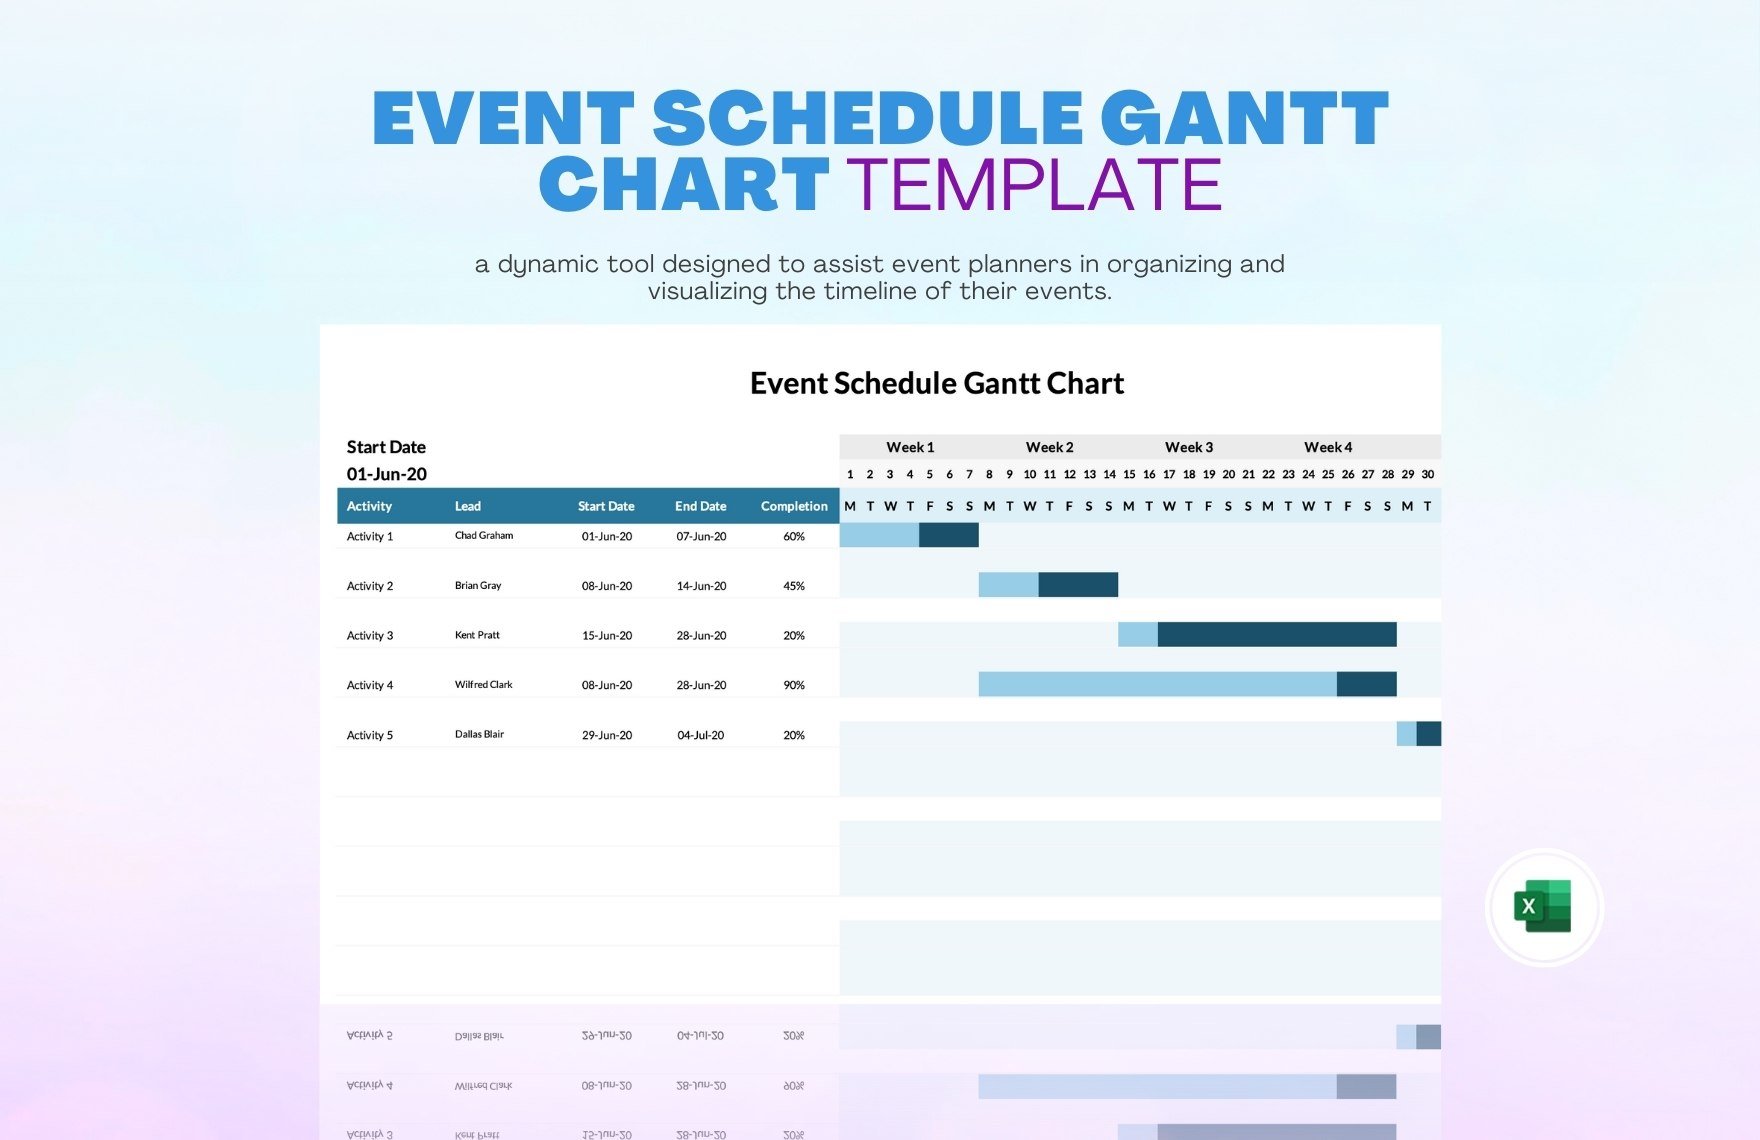 Event Schedule Gantt Chart Template in Excel